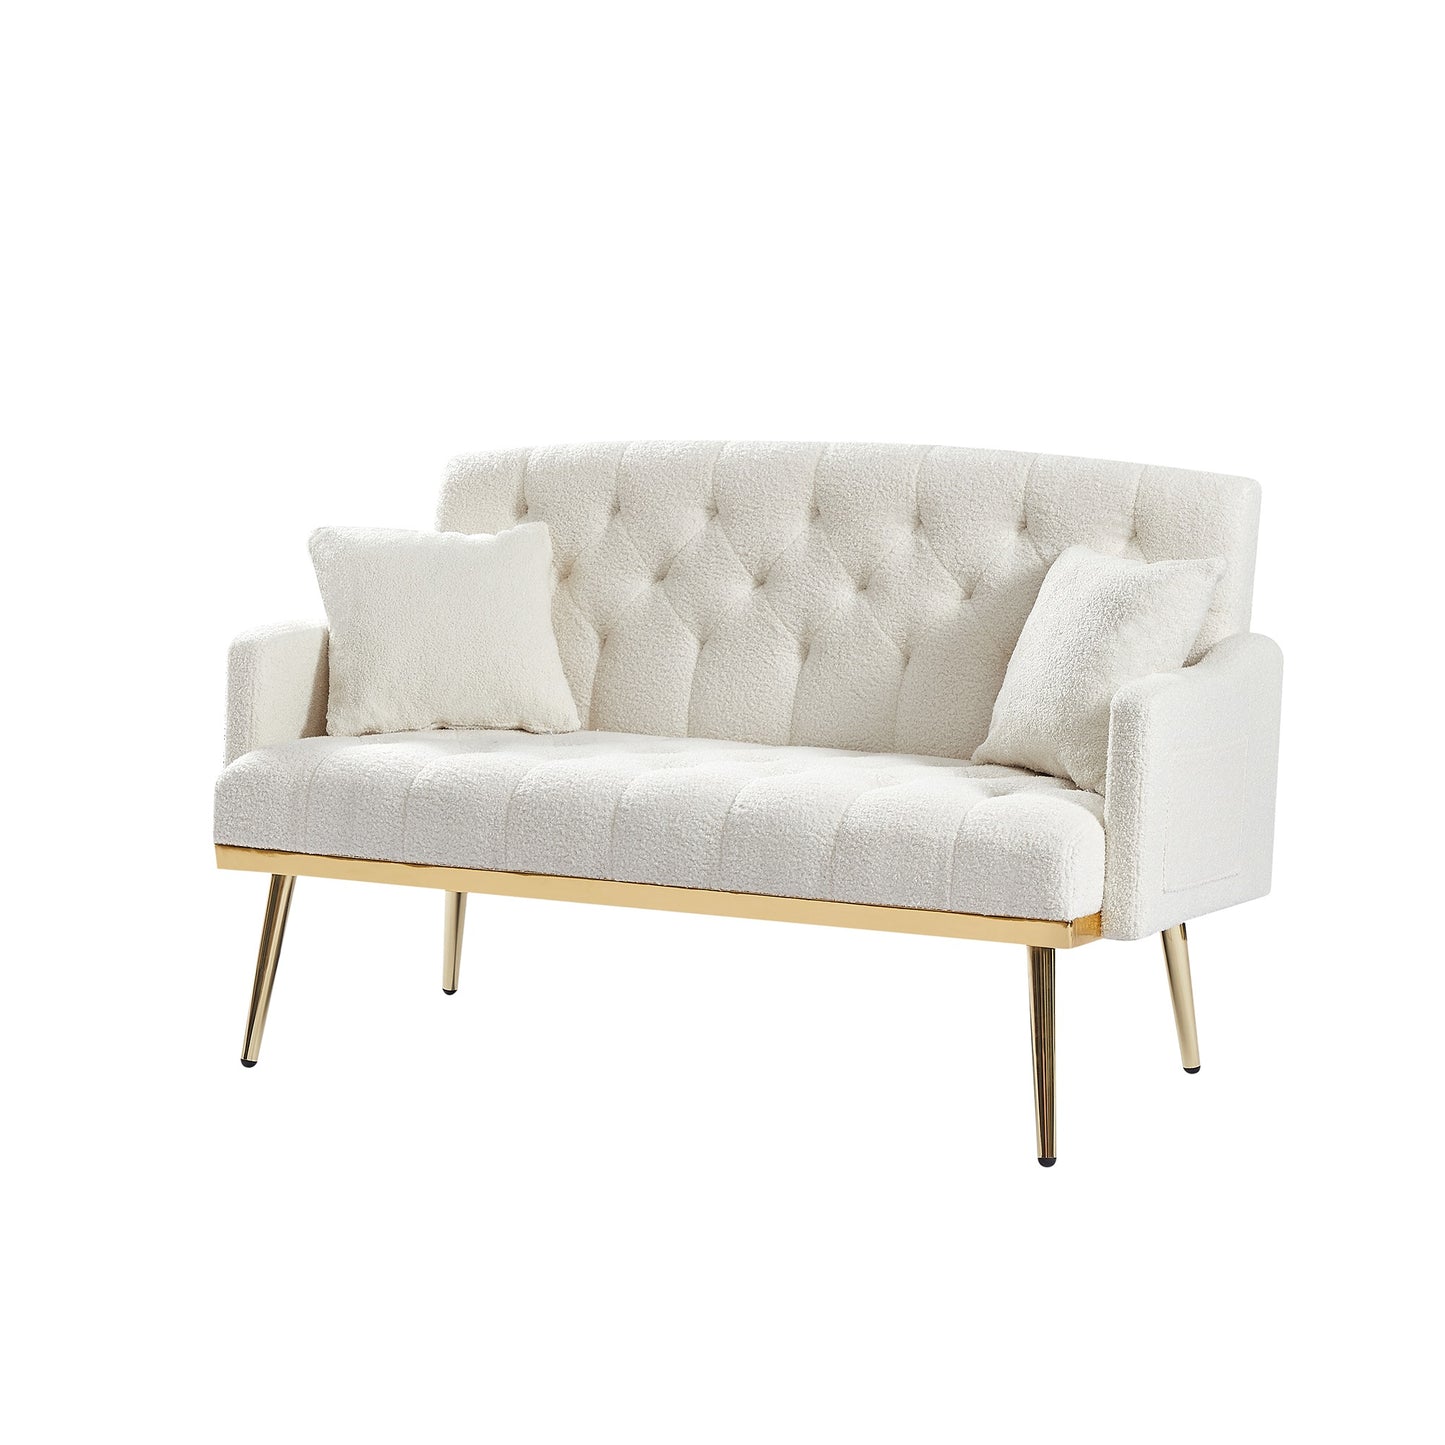 1st Choice Contemporary Cream White Teddy Fabric 2 Seater Sofa